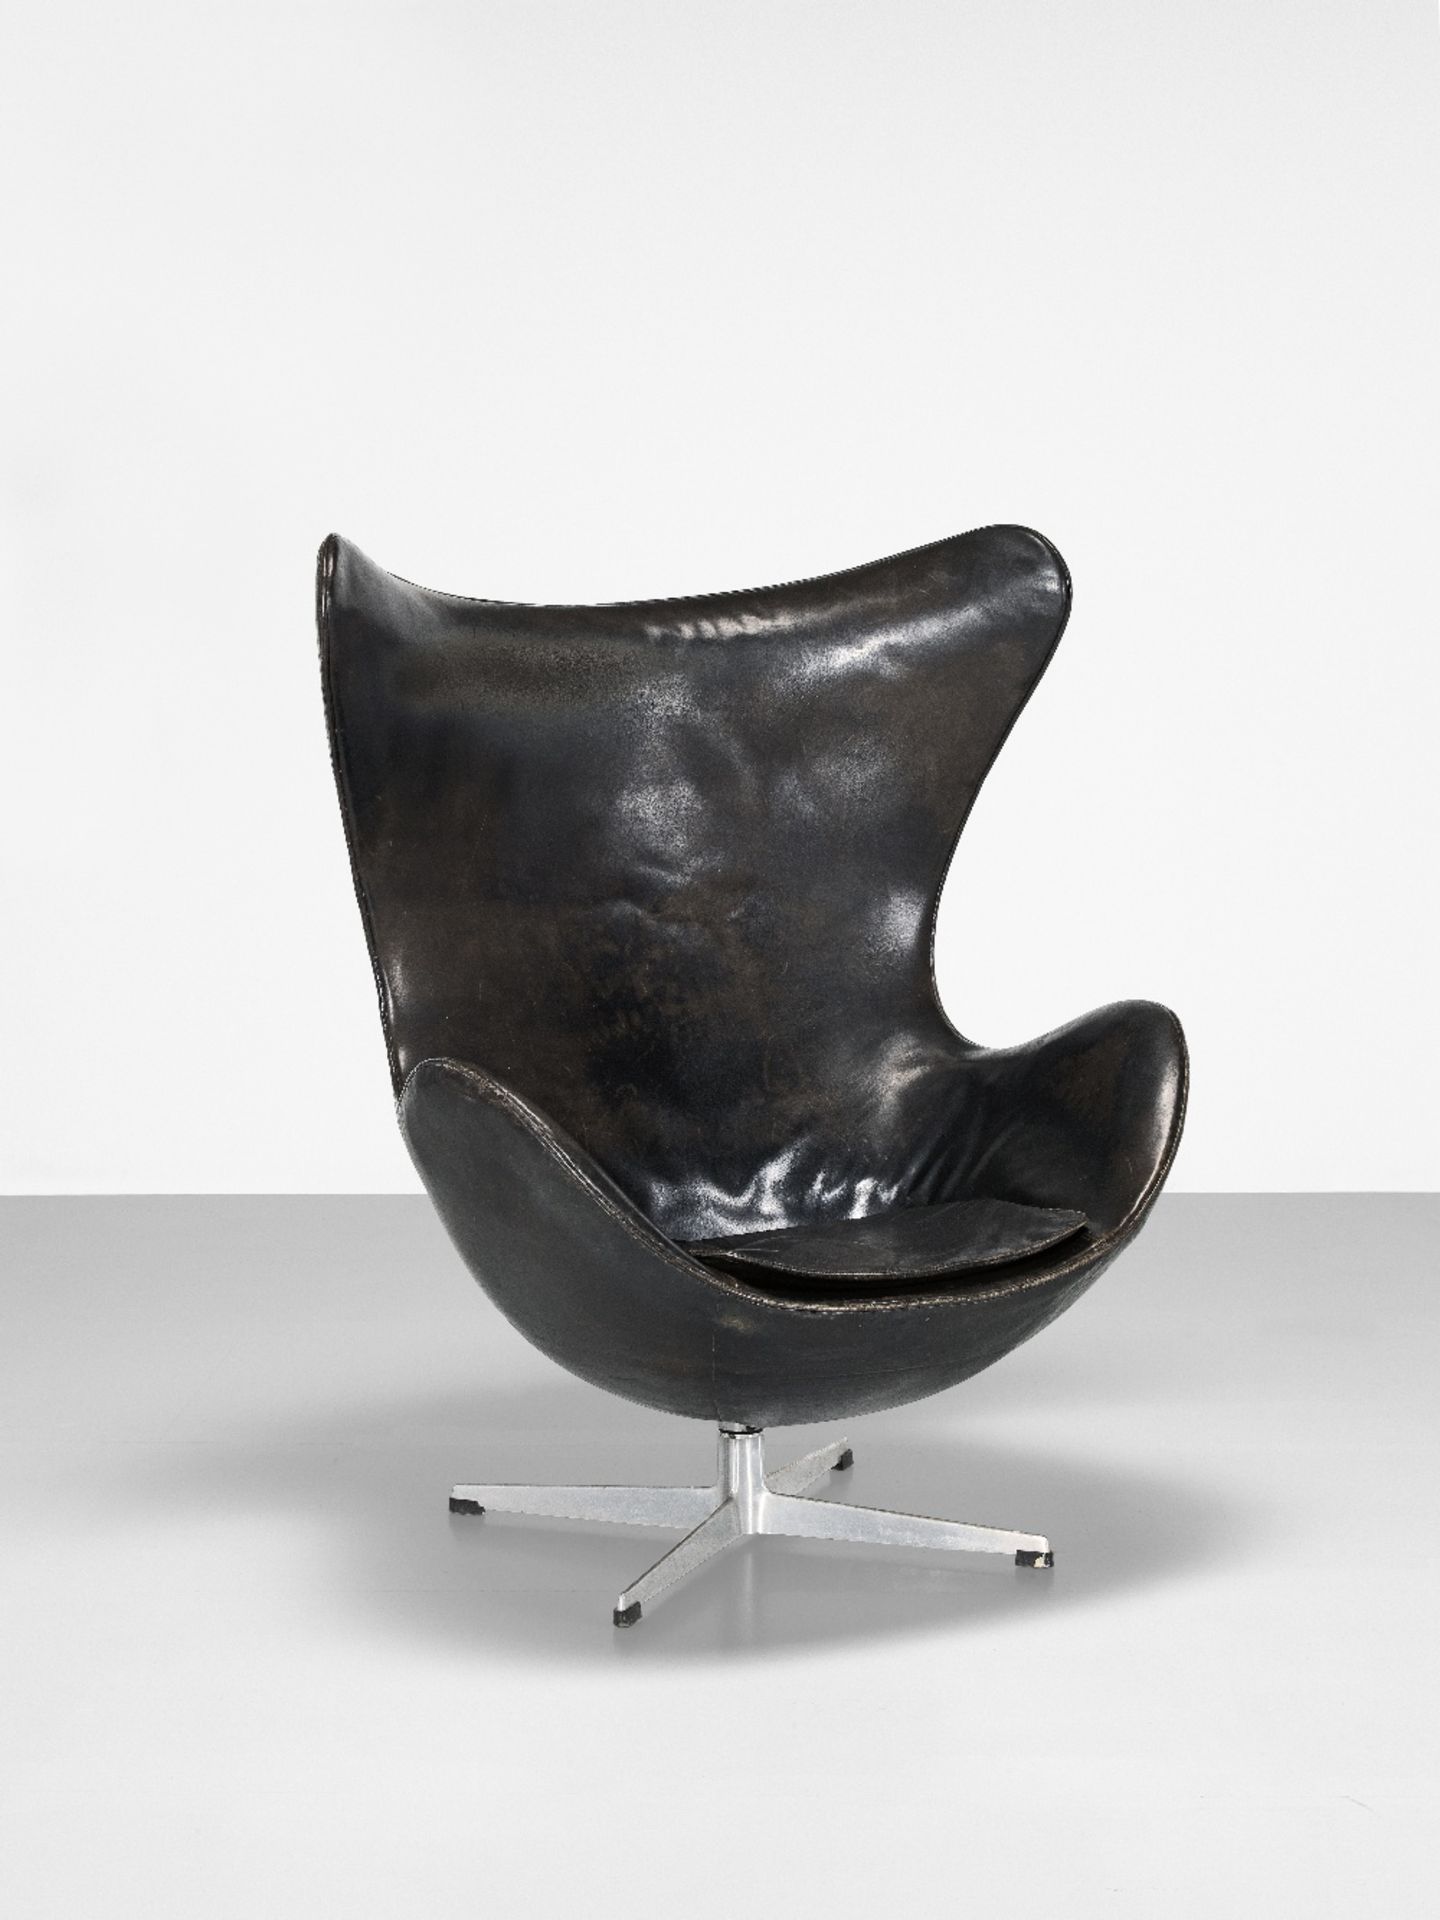 Arne Jacobsen Early 'Egg' armchair, model no. 3317, designed 1958, manufactured 1963